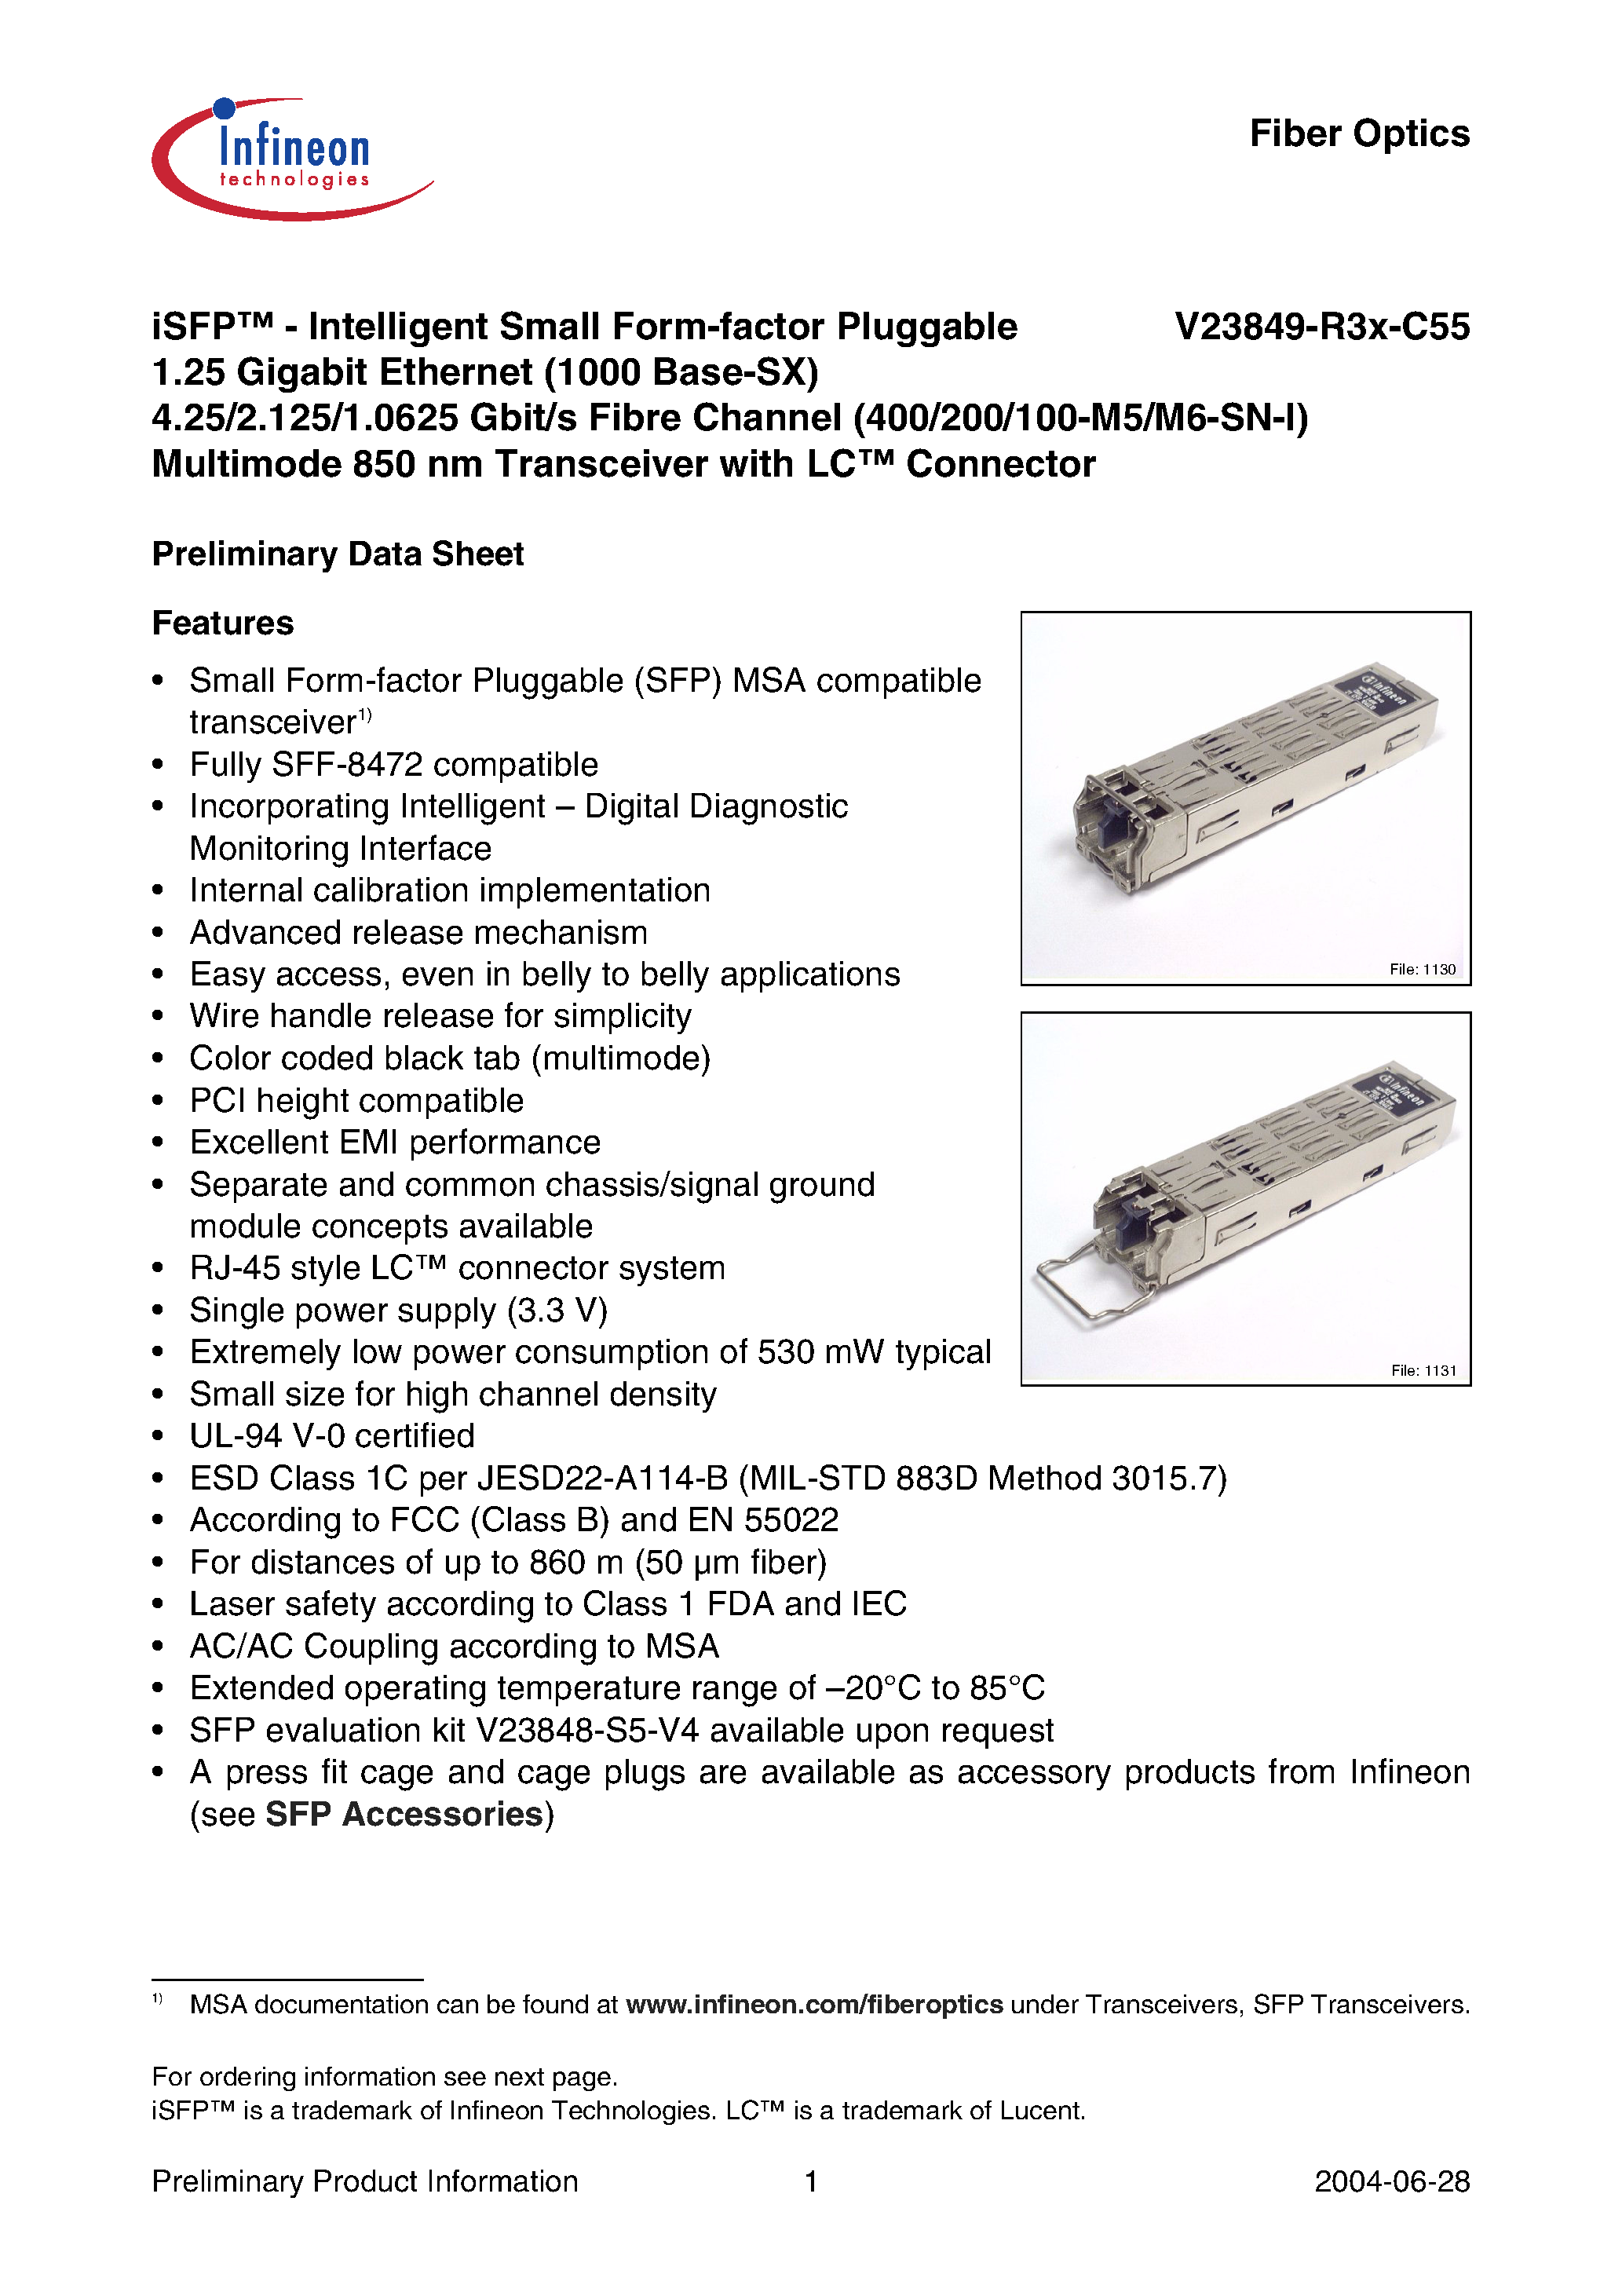 Datasheet V23849-R36-C55 - iSFP-Intelligent Small Form-factor Pluggable 1.25 Gigabit Ethernet 4.25/2.125/1.0625 Gbit/s Fibre Channel page 1